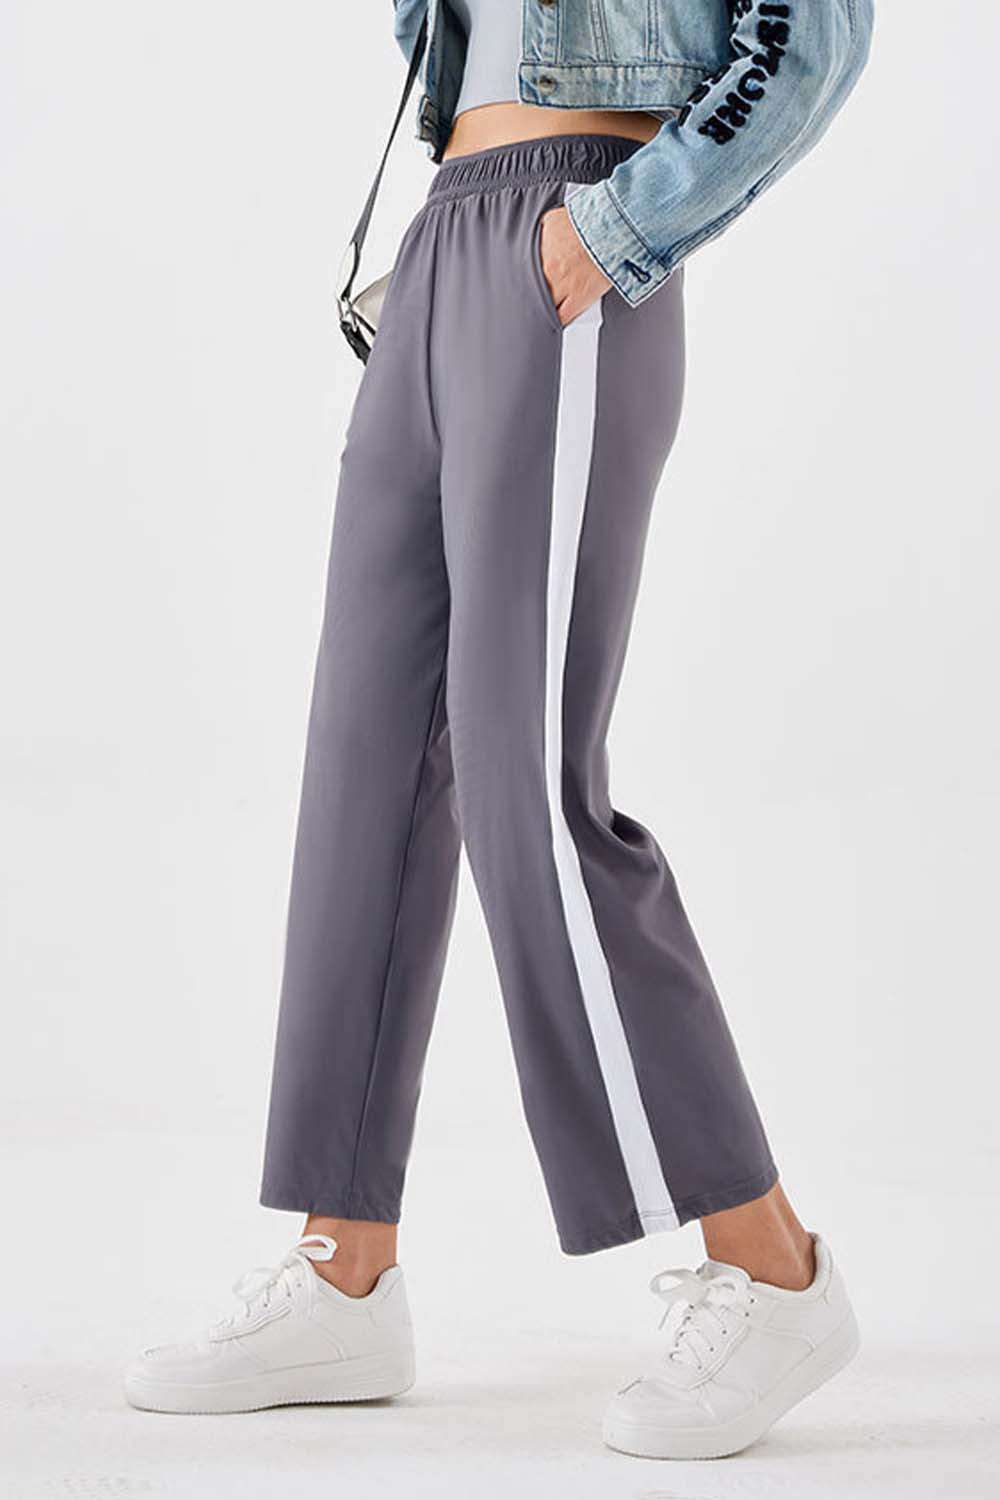 Seam Detail Long Pants - Purple / S - Bottoms - Pants - 7 - 2024